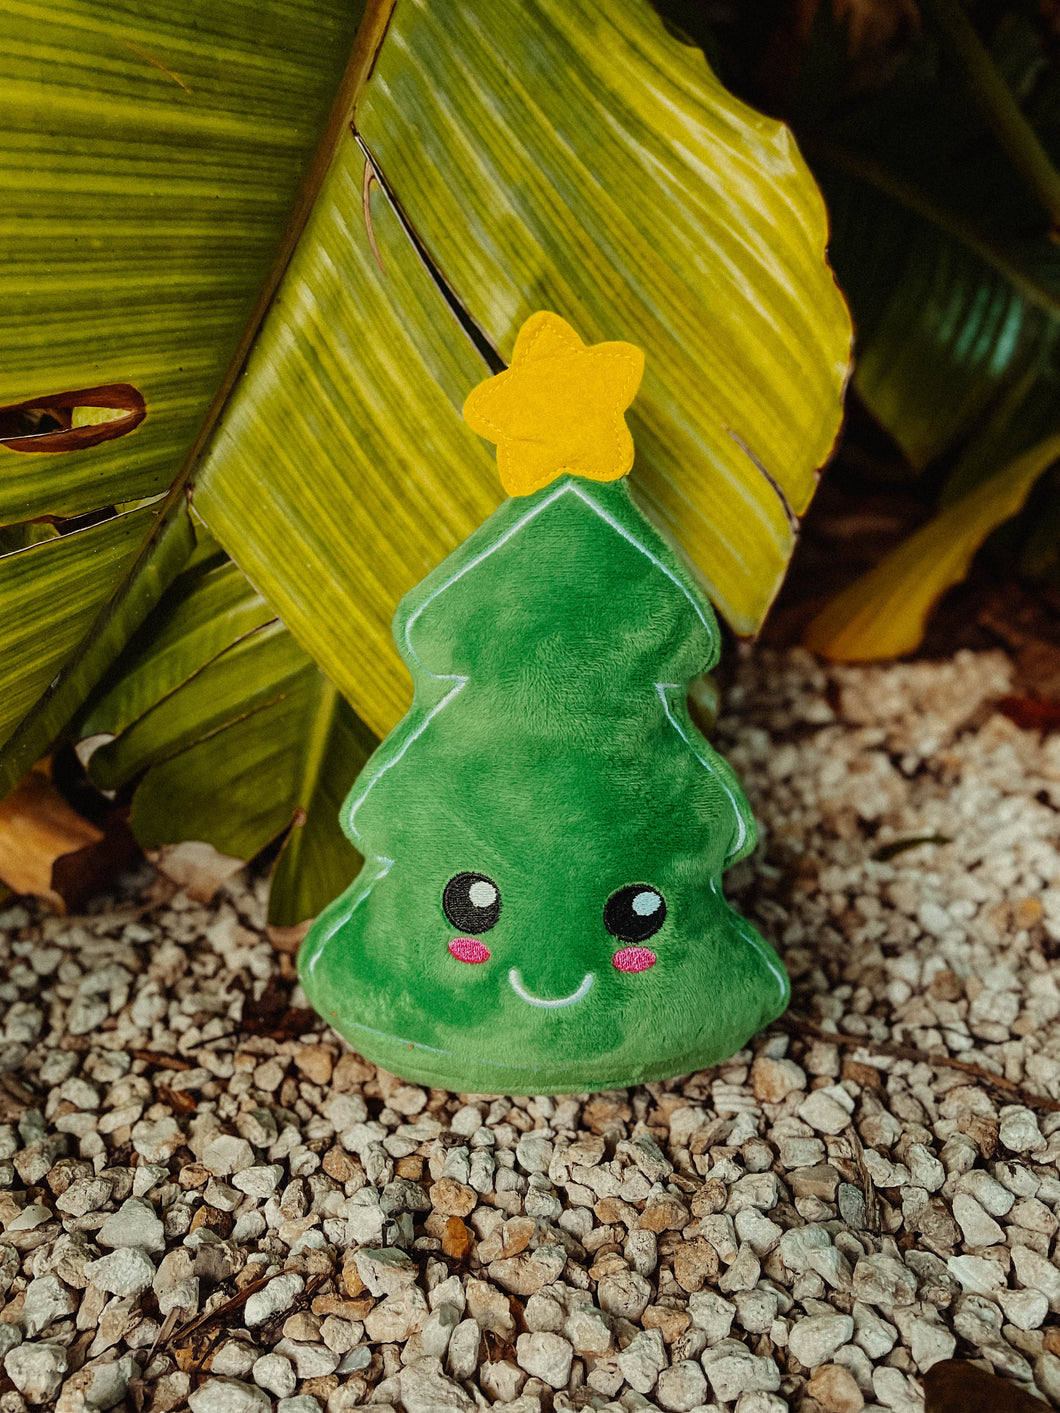 Christmas Tree Plush Toy